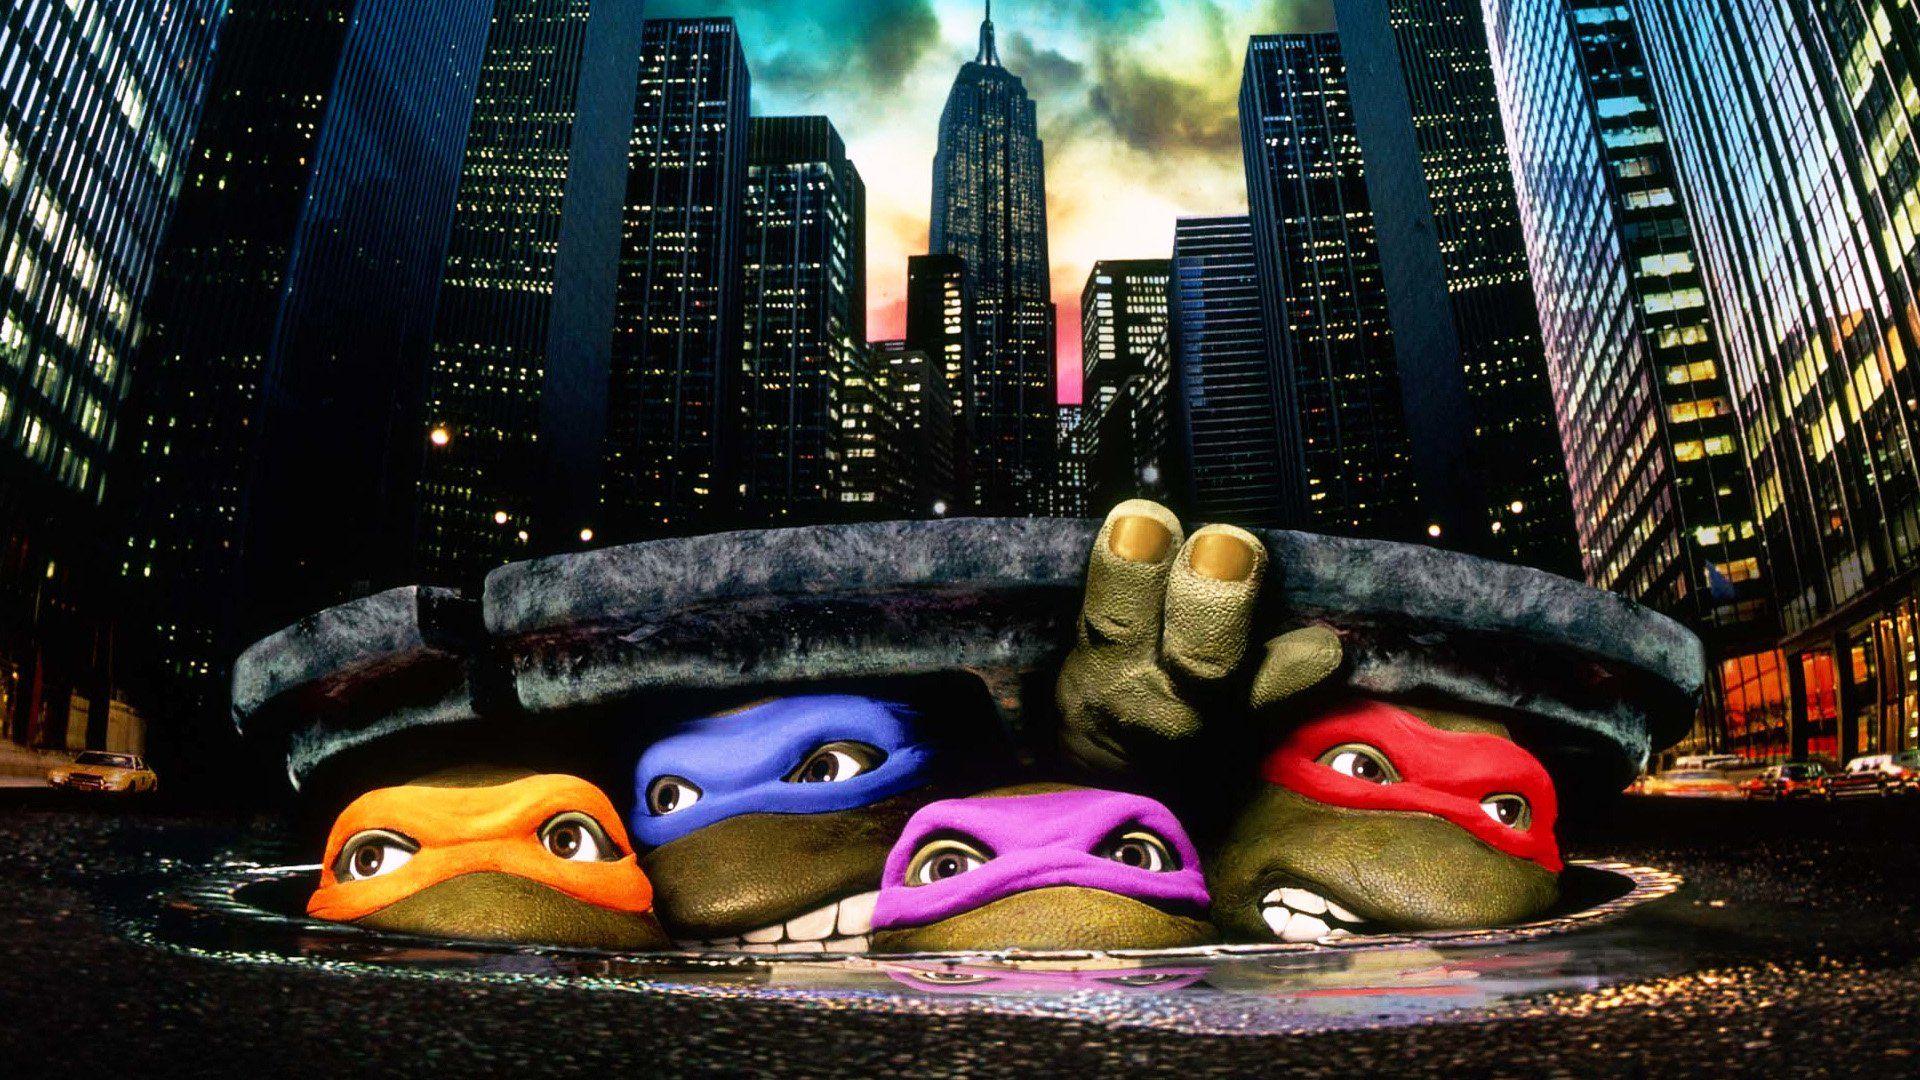 Teenage Mutant Ninja Turtles (1990) HD Wallpaper and Background Image